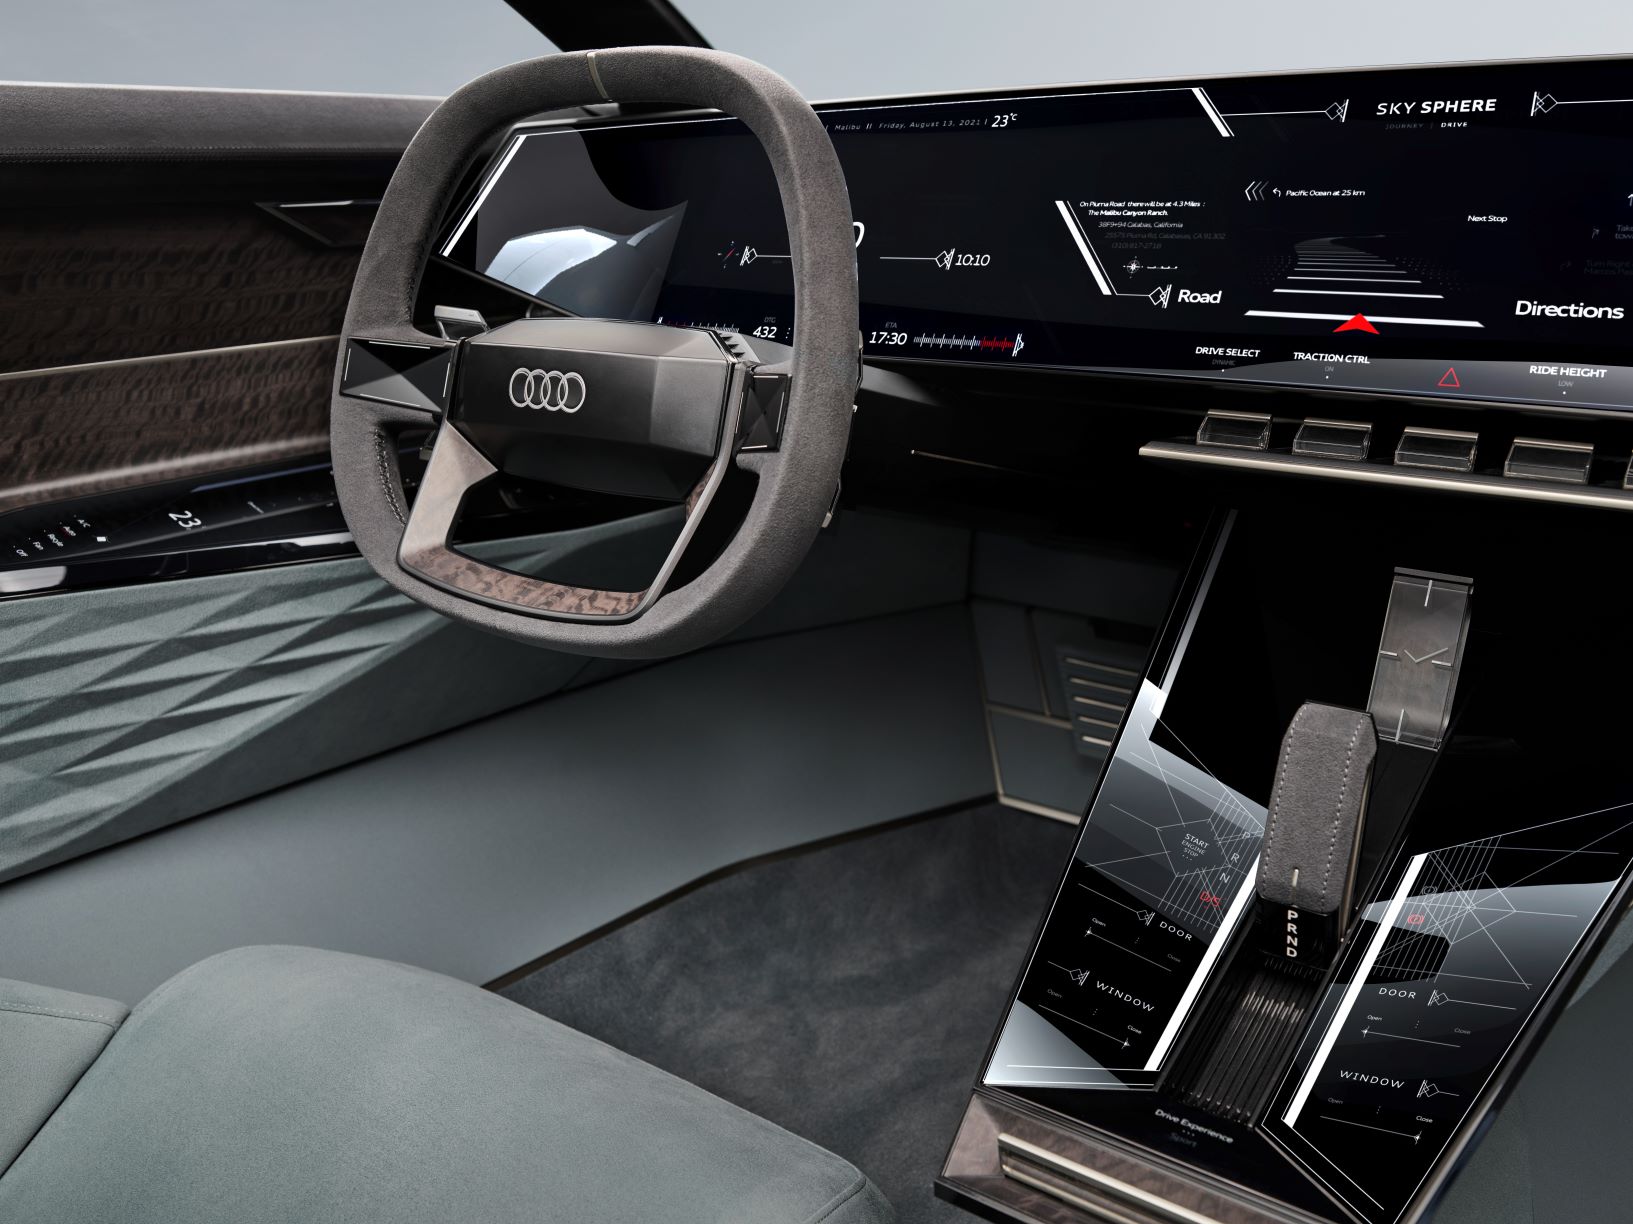 Audi Skysphere interieur